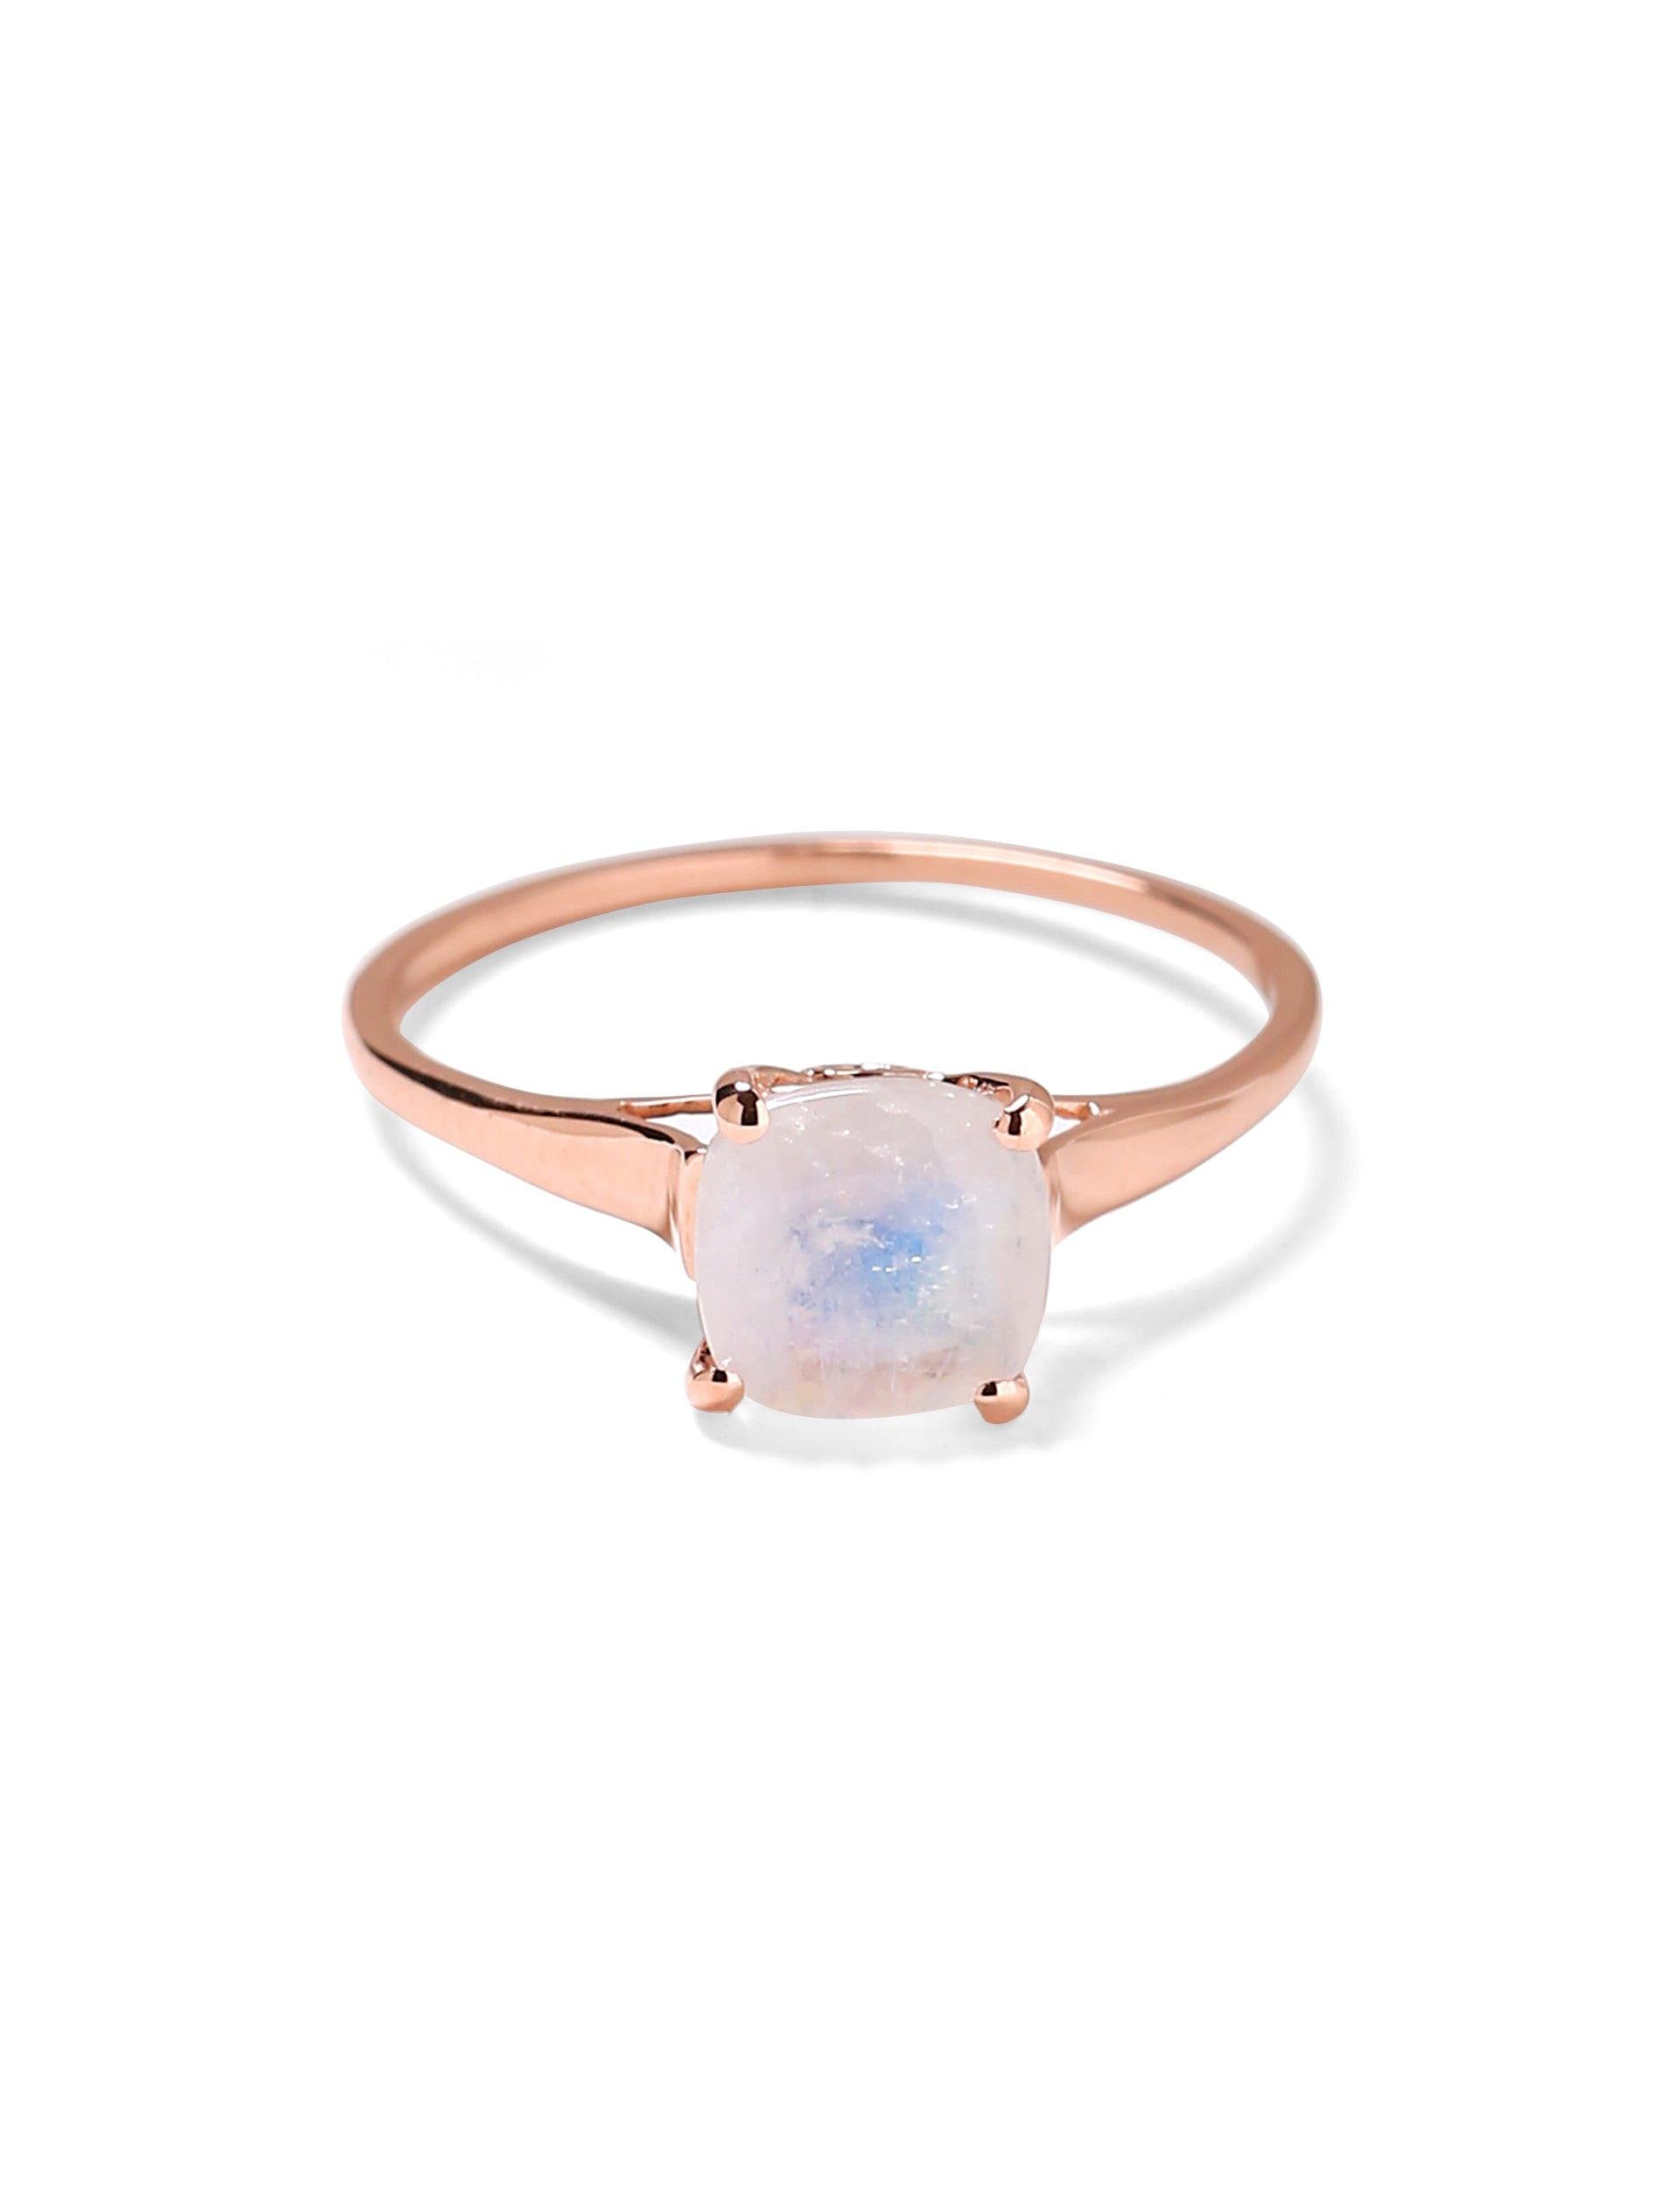 1.88 Cts Rainbow Moonstone Solid 10k Rose Gold Ring Jewelry - YoTreasure